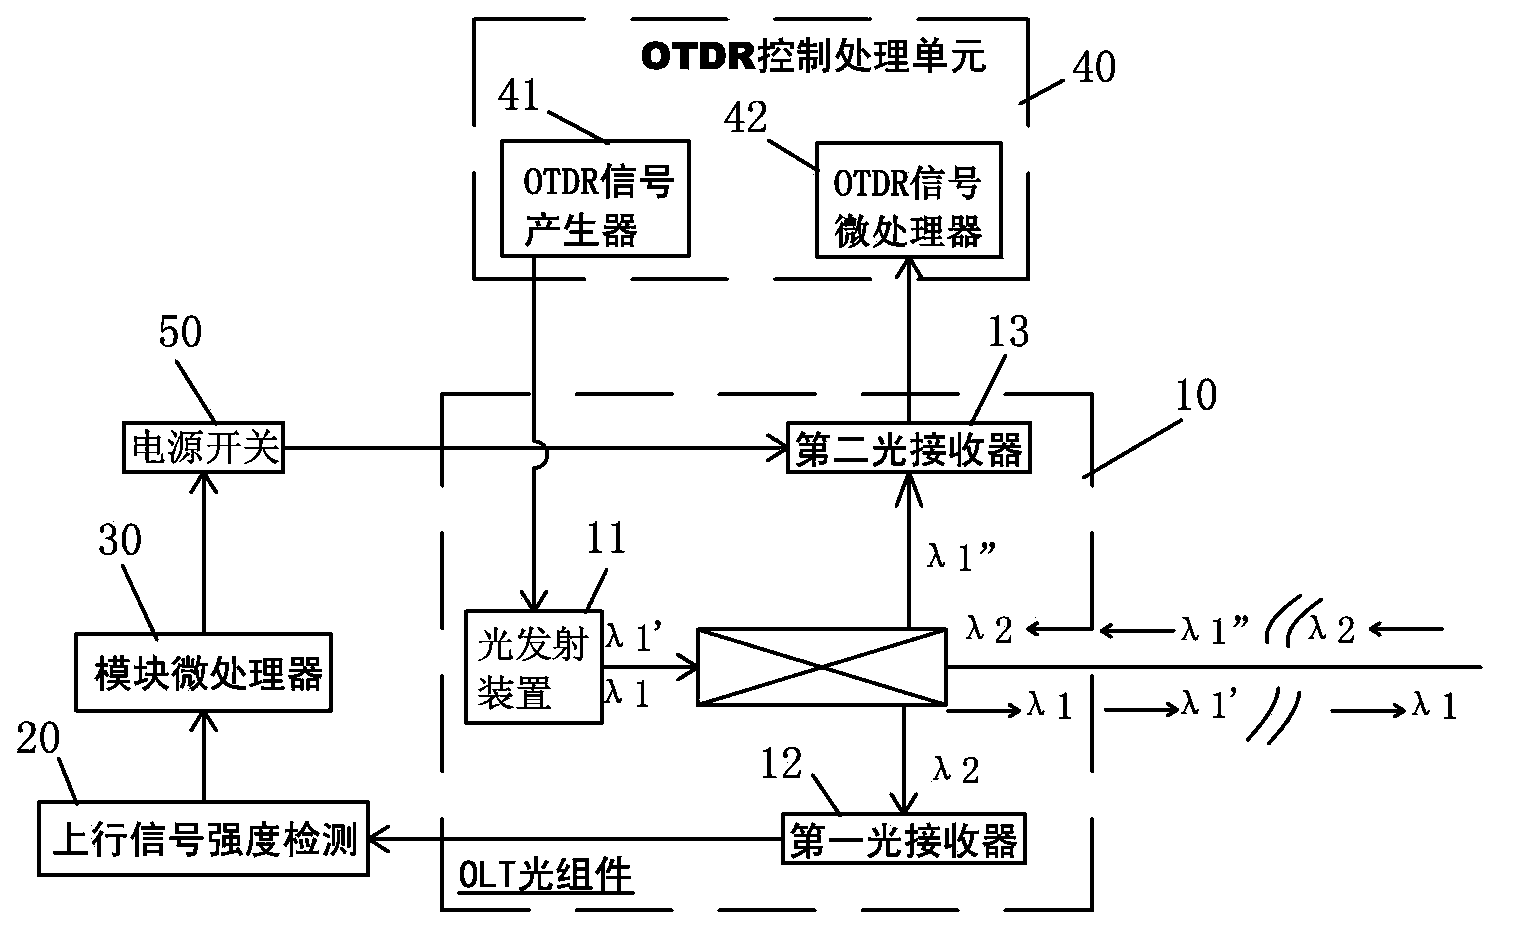 OTDR (Optical Time-Domain Reflectermeter) control circuit of OLT (Optical Line Terminal) optical module